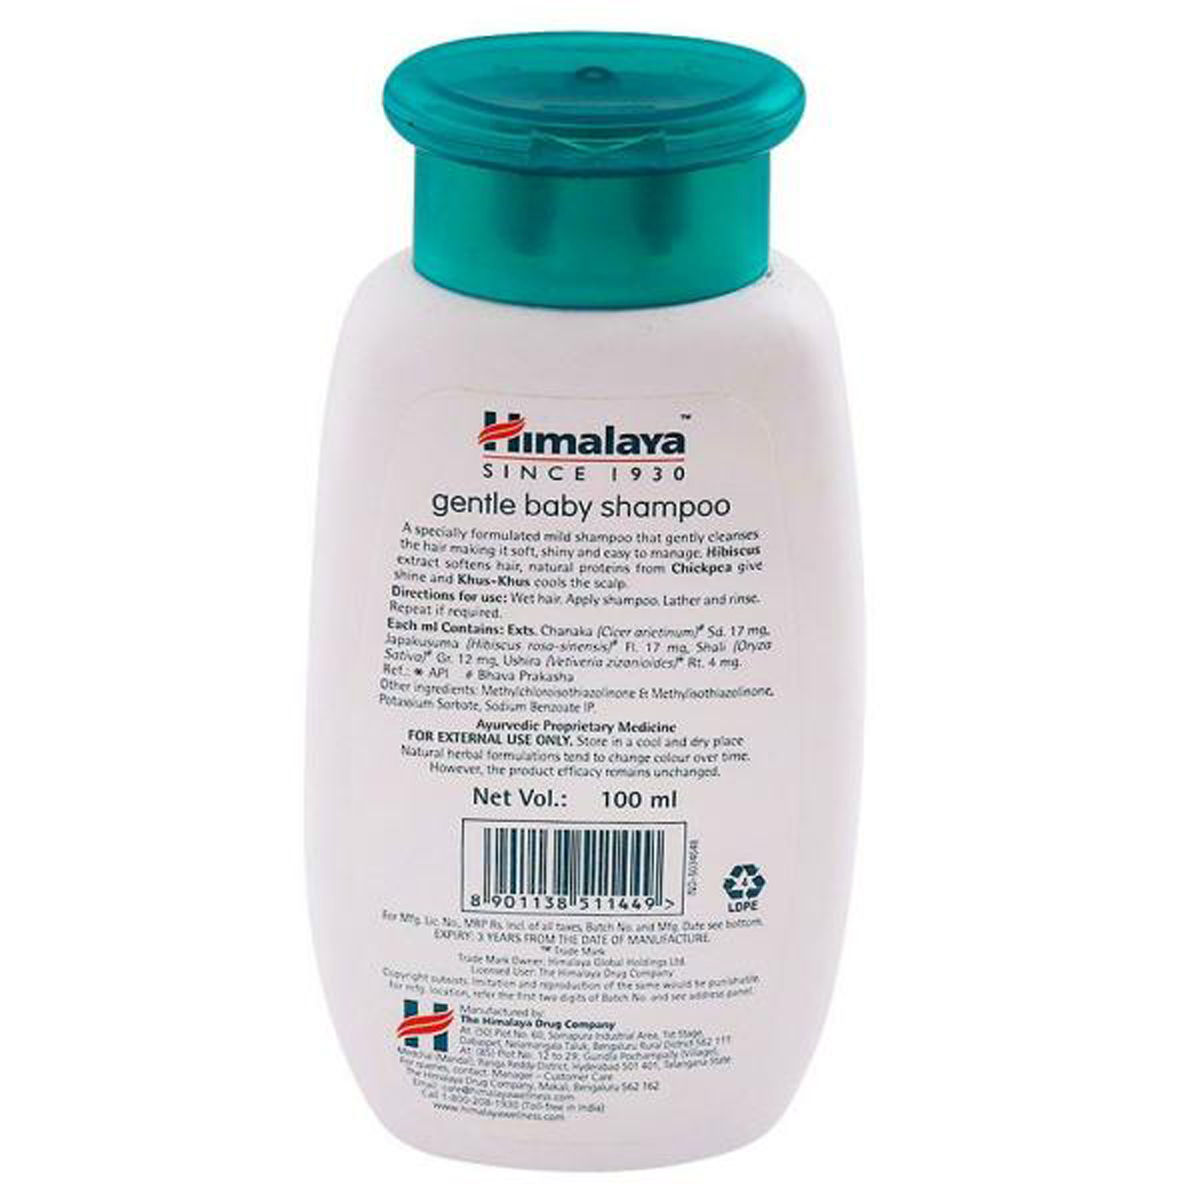 Himalaya Gentle Baby Shampoo, 100 ml Price, Uses, Side Effects ...